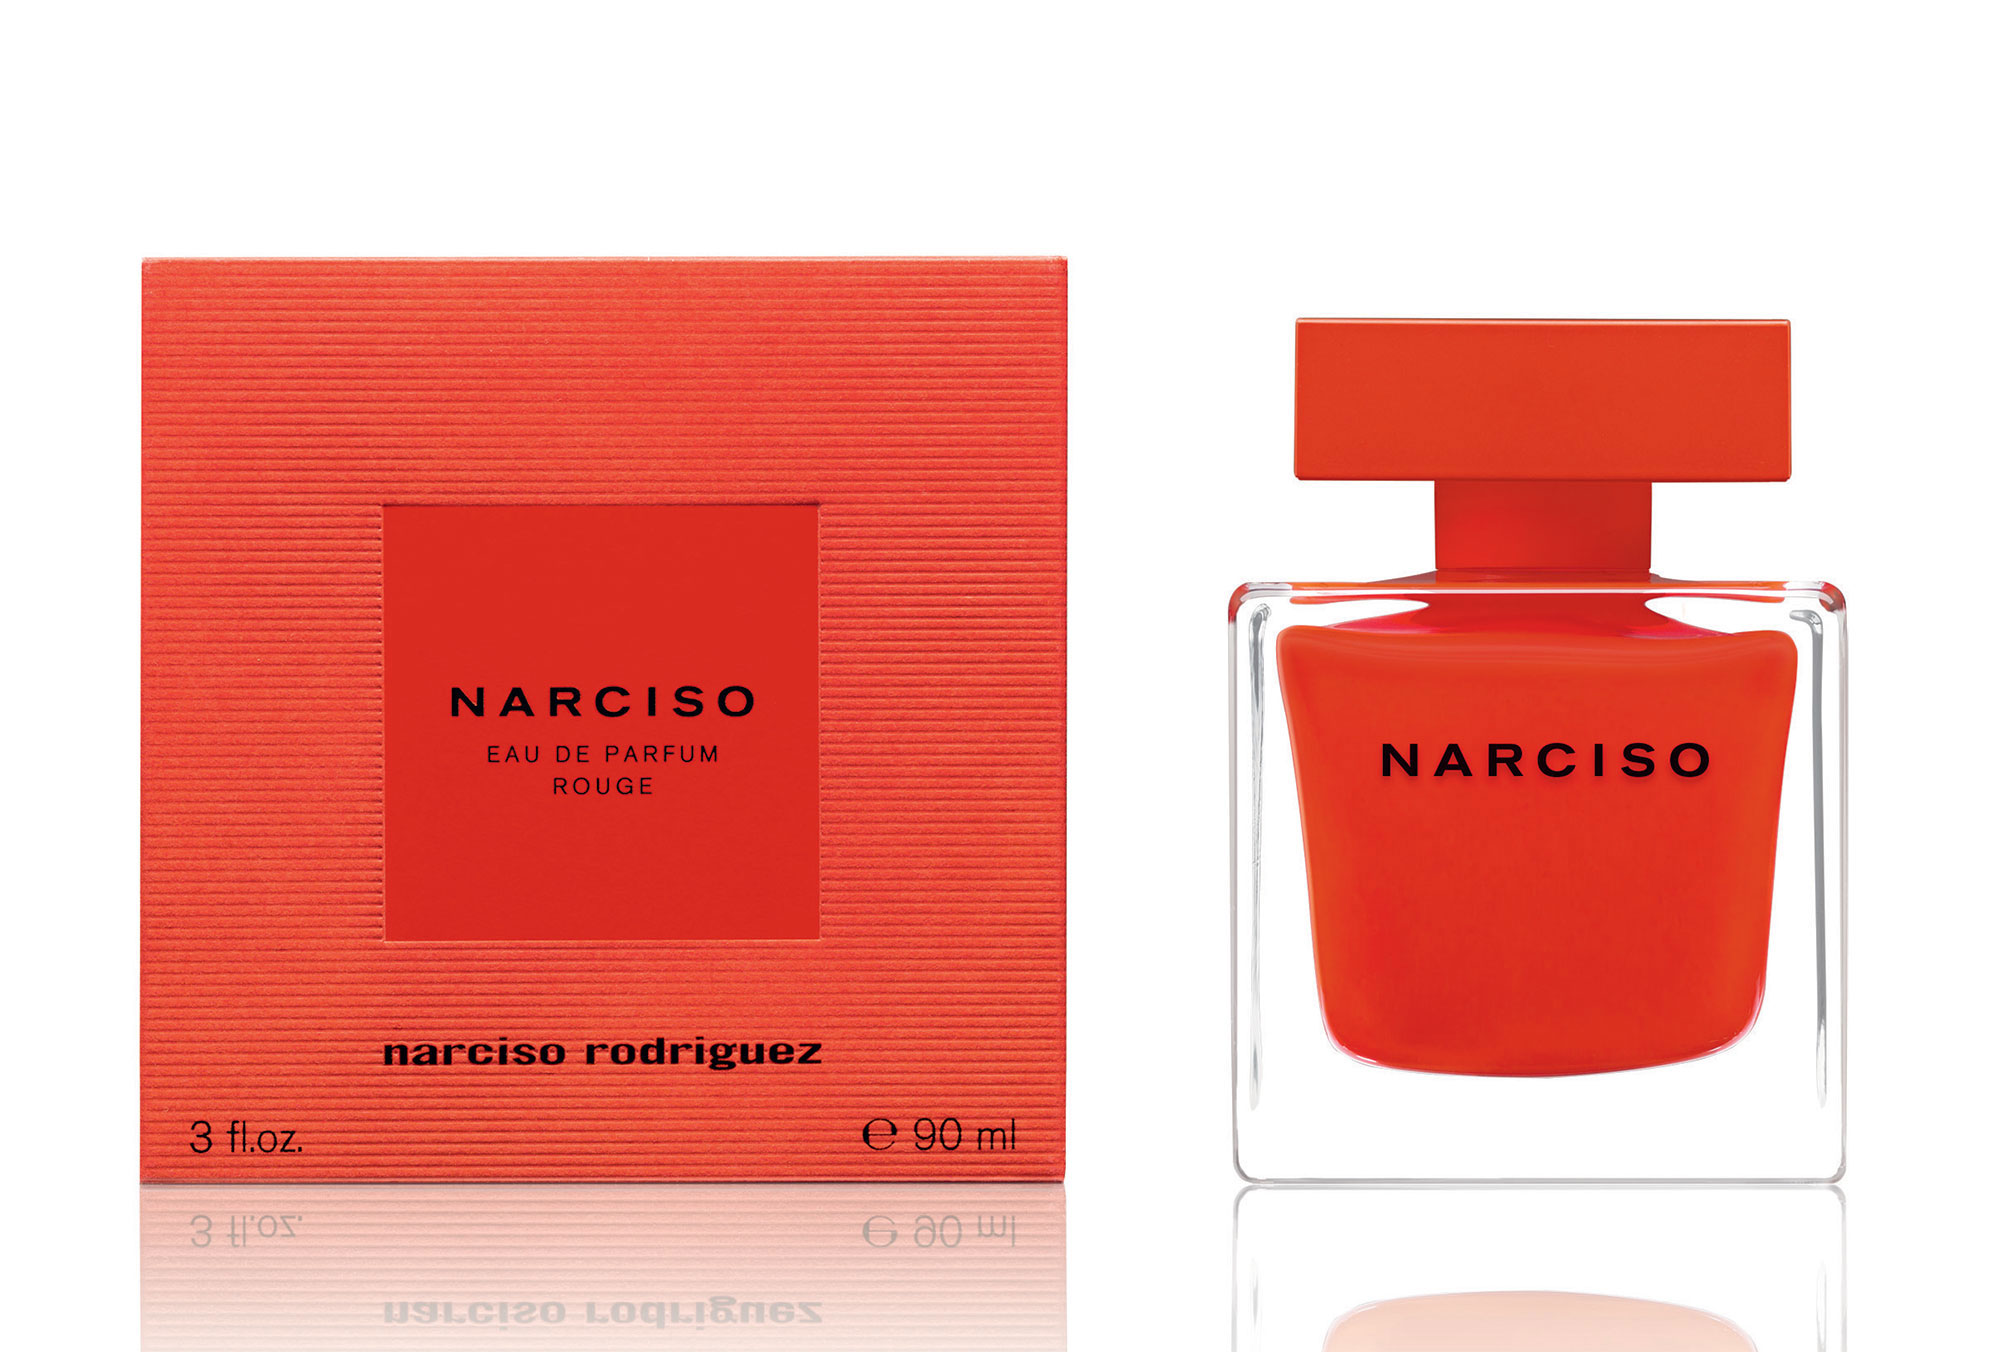 Parfum Narciso - Homecare24